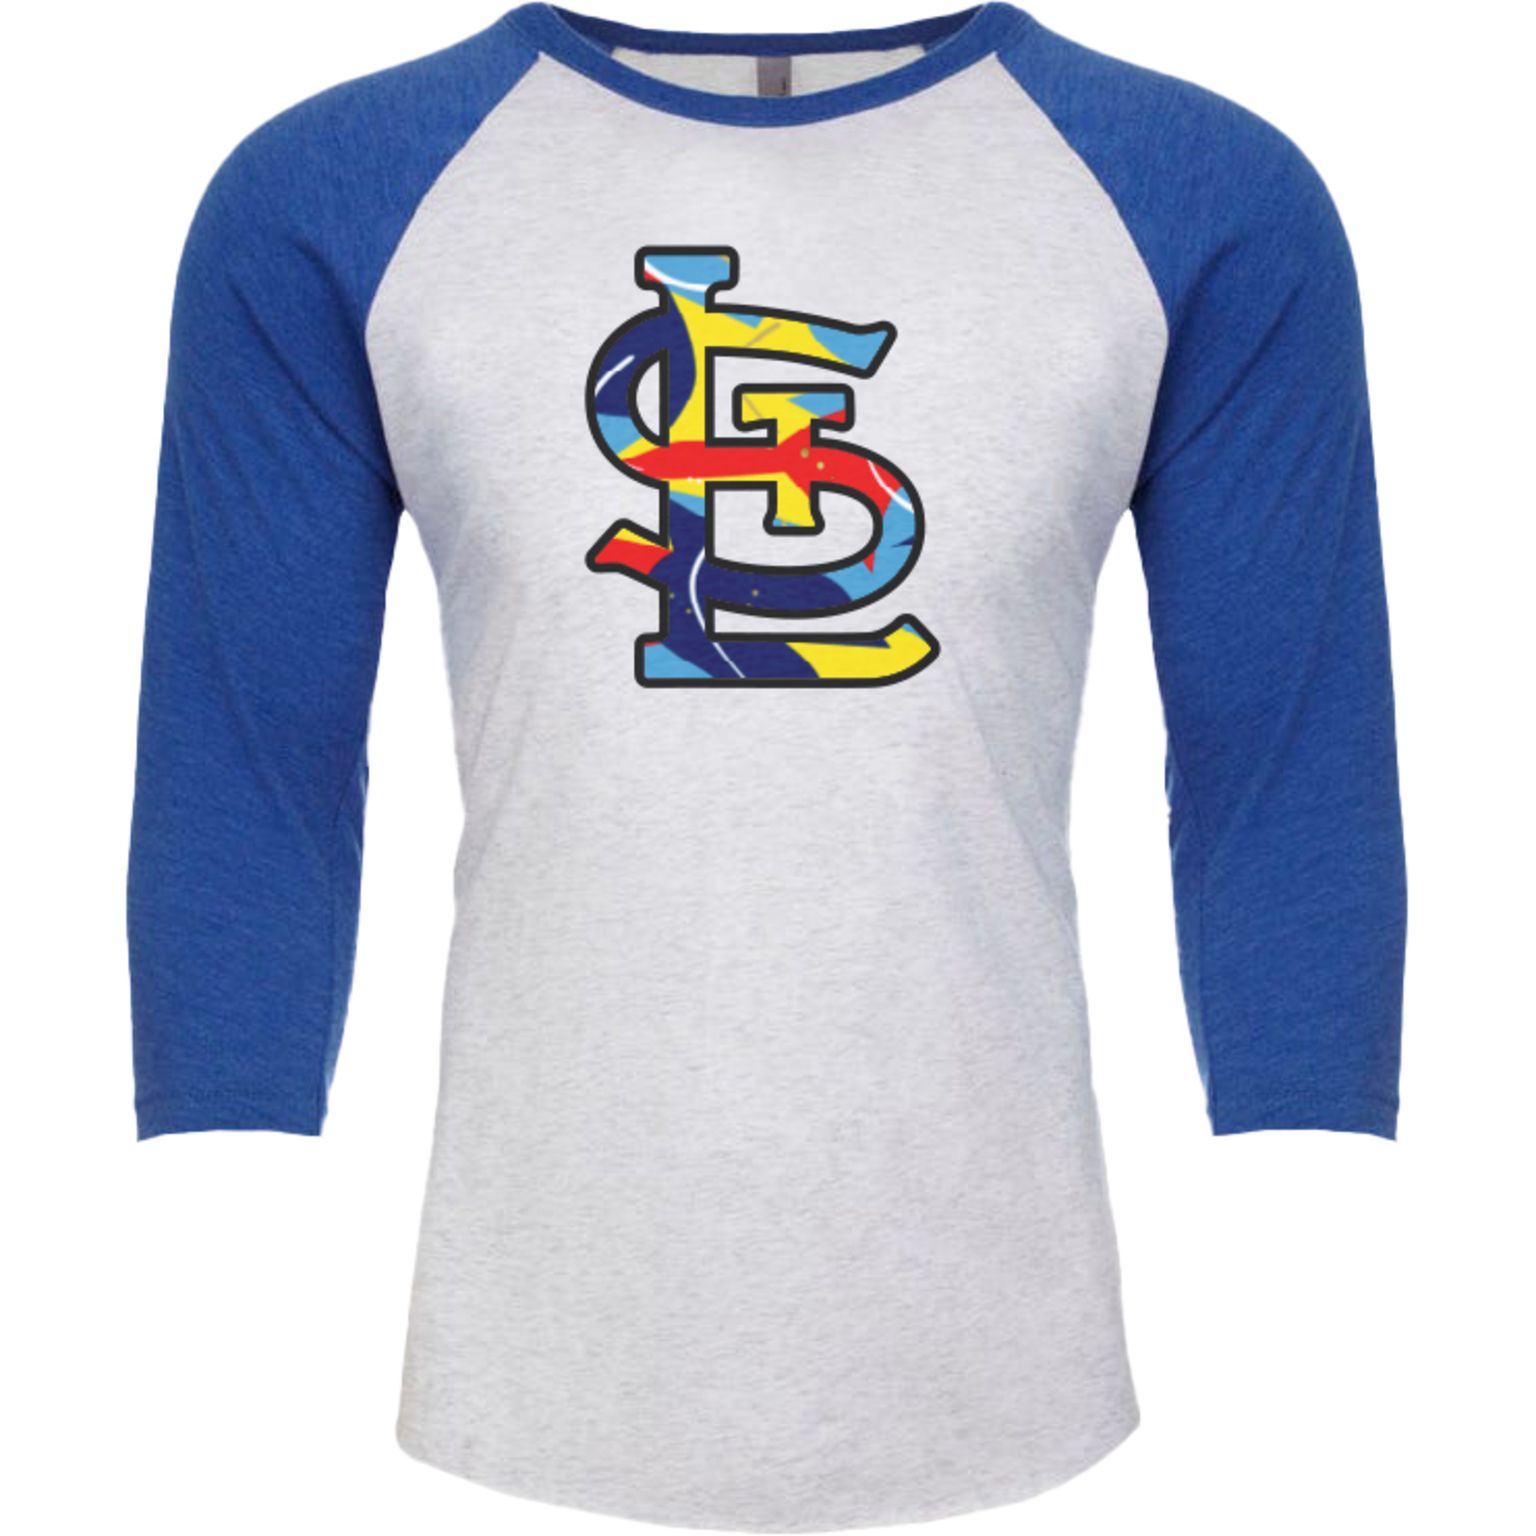 MLB Baseball Jerseys/t-shirts PICK 1: St. Louis Cardinals All 